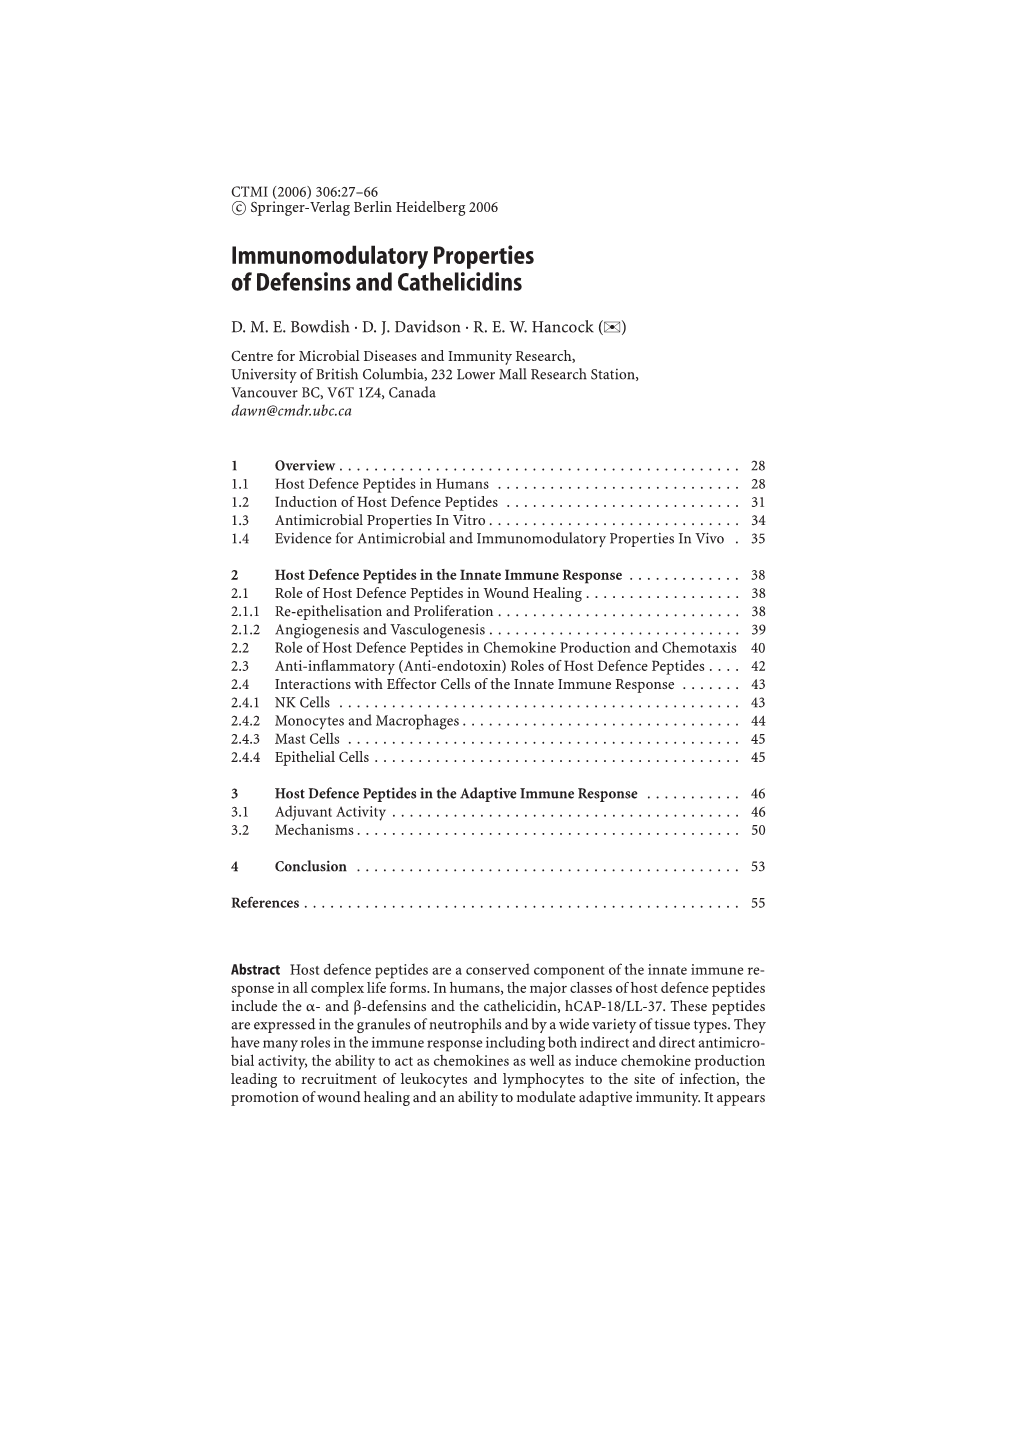 Immunomodulatory Properties of Defensins and Cathelicidins